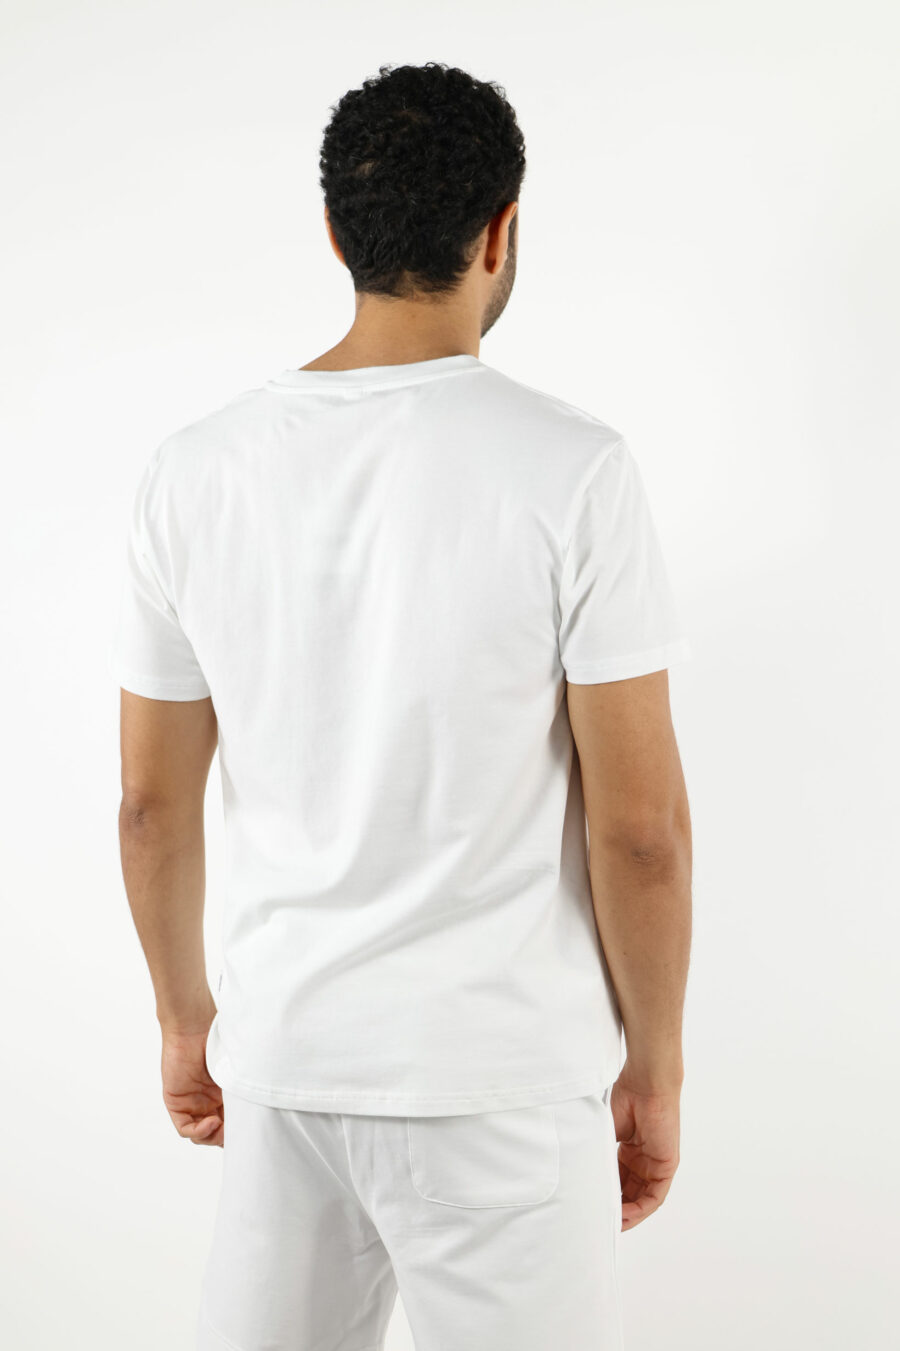 T-Shirt weiß mit Mini-Logo-Bär "Underbear" in schwarzem Gummi - 111032